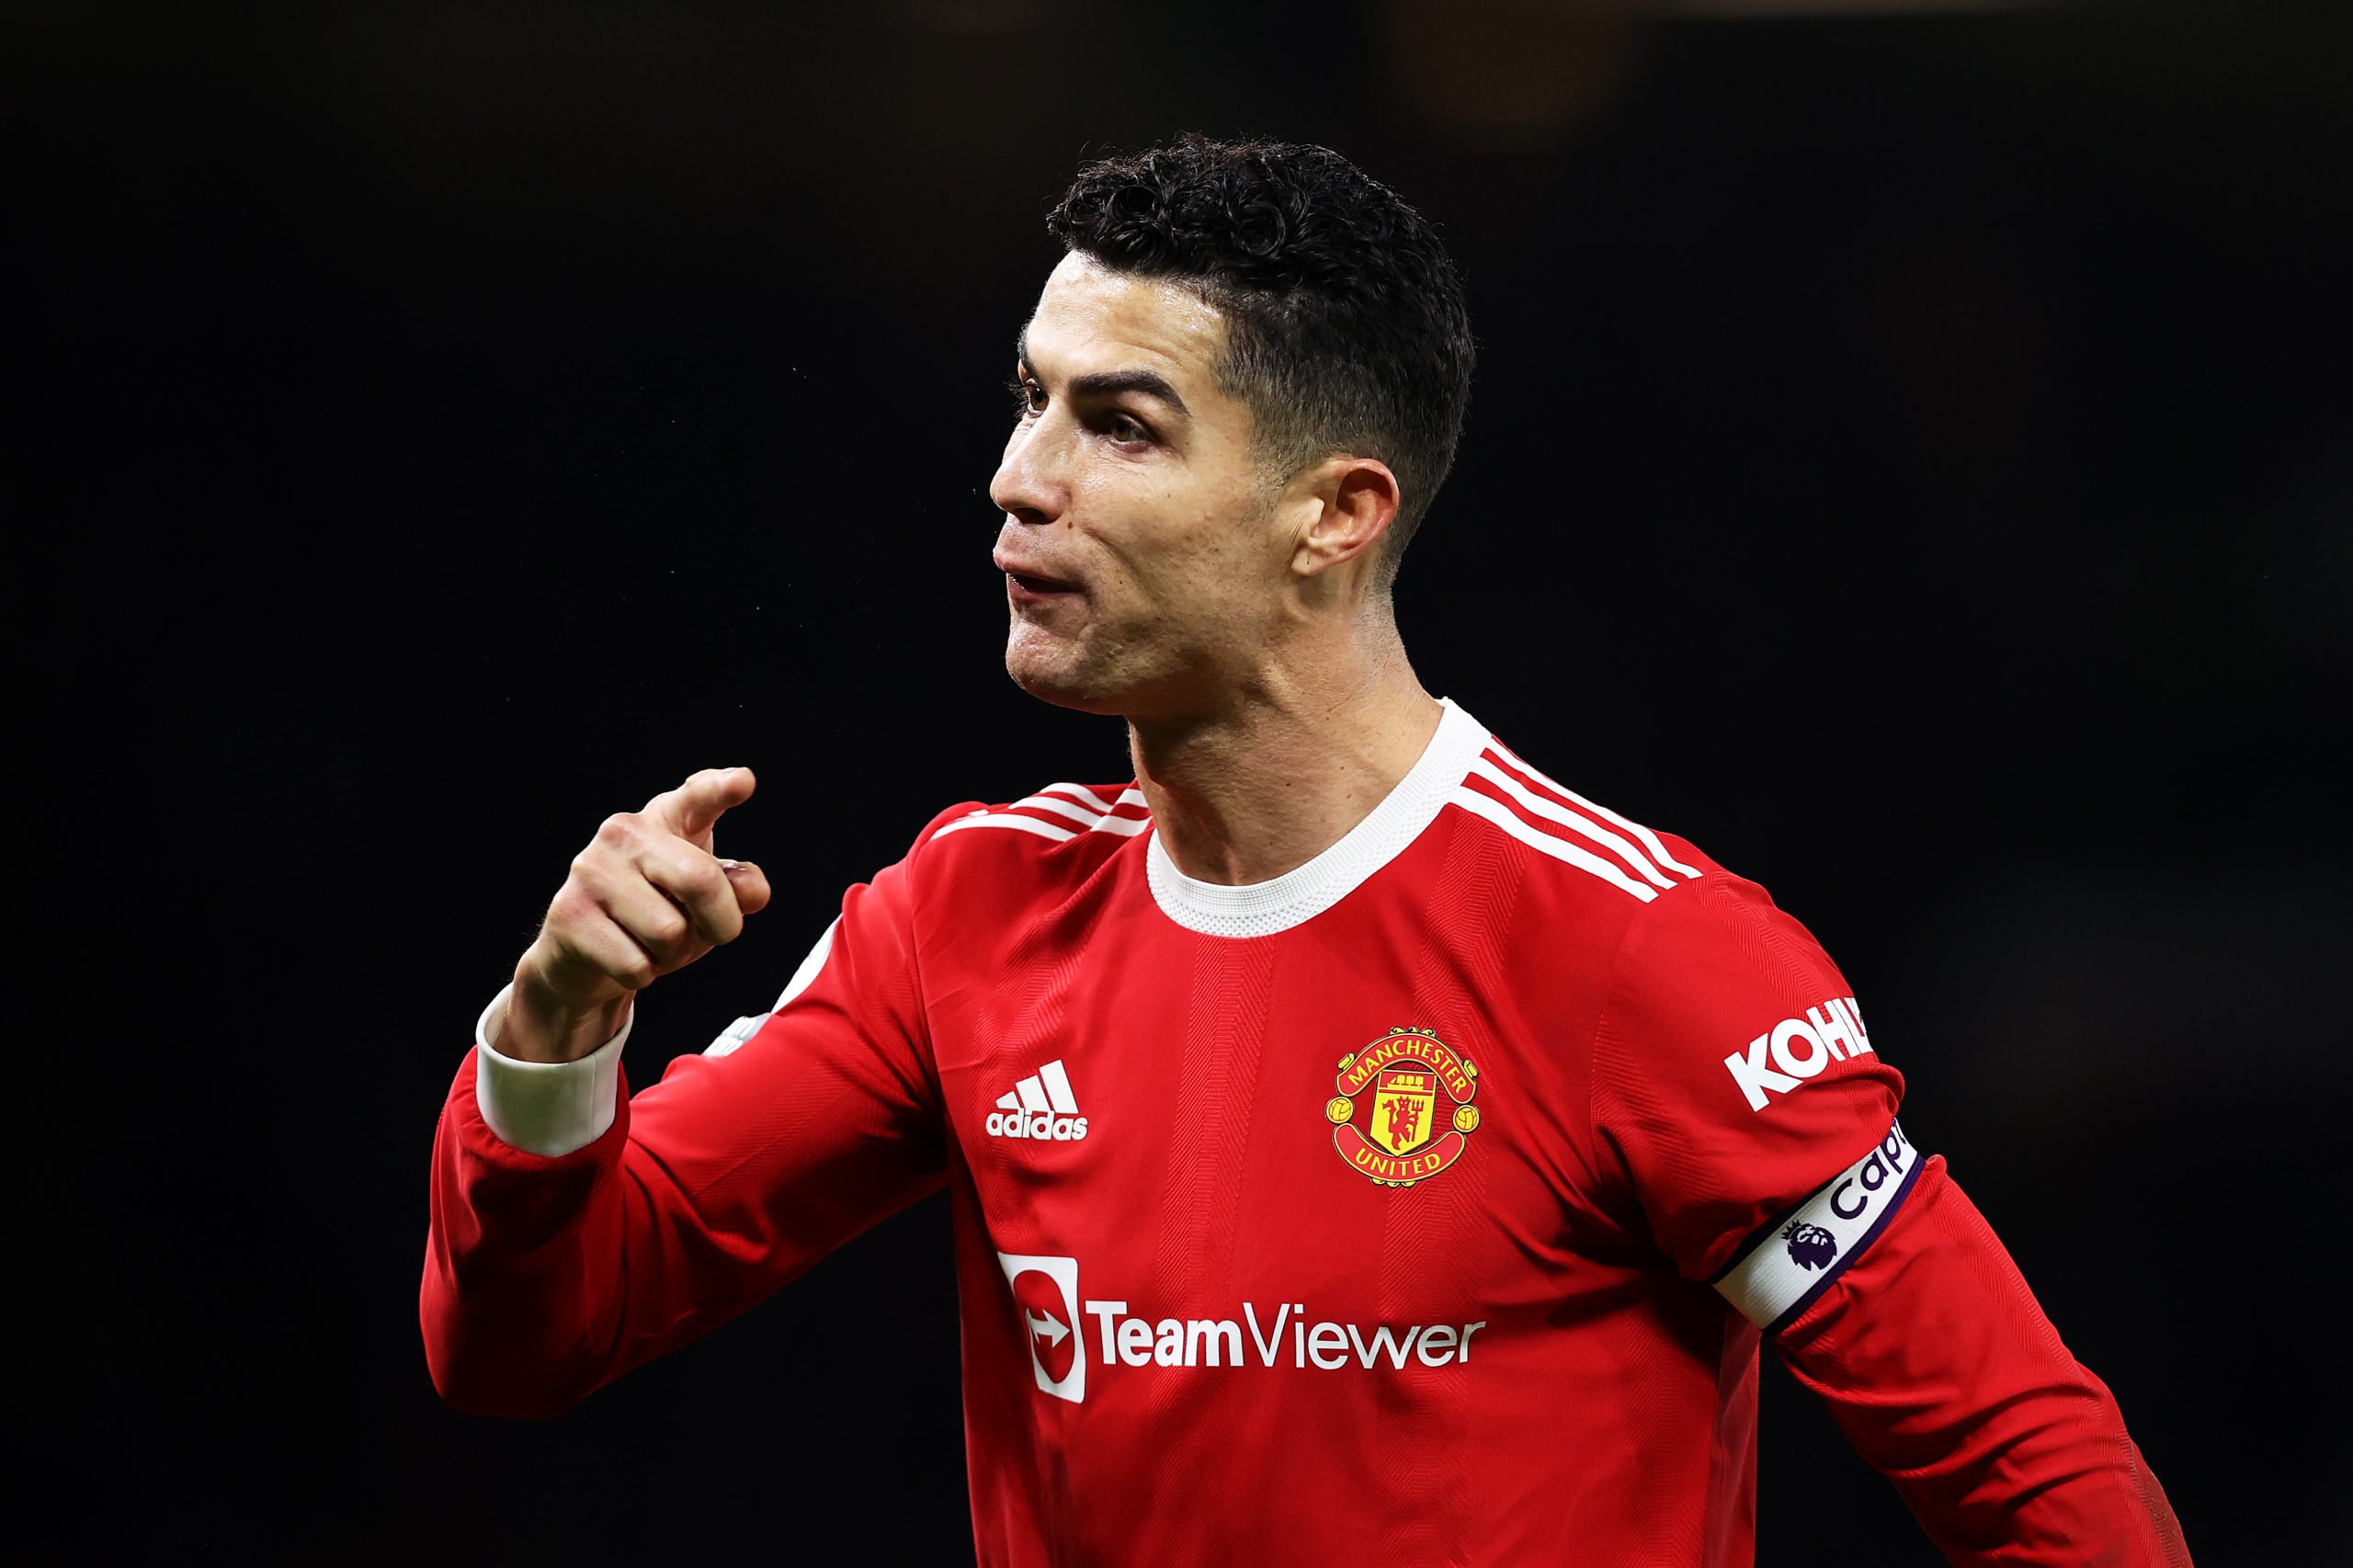 Romano refutes reports Ronaldo is unhappy at Manchester United